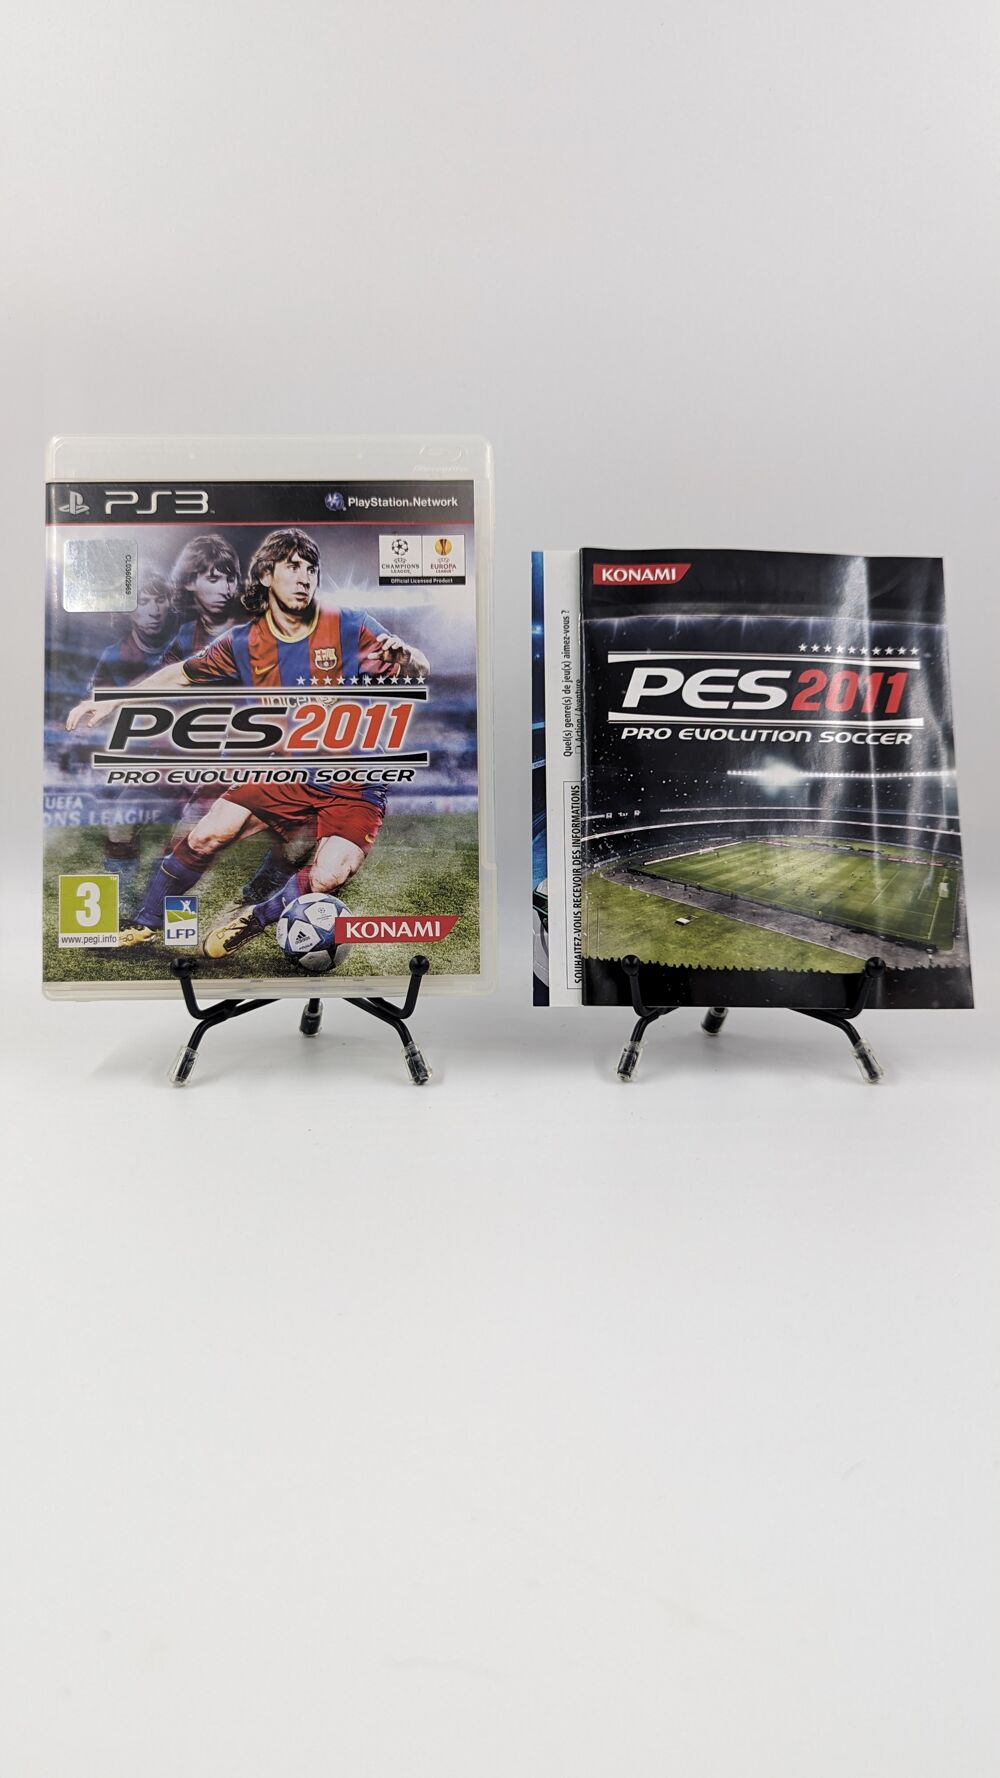 Jeu PS3 Playstation 3 Pro Evolution Soccer 2011 complet Consoles et jeux vidos